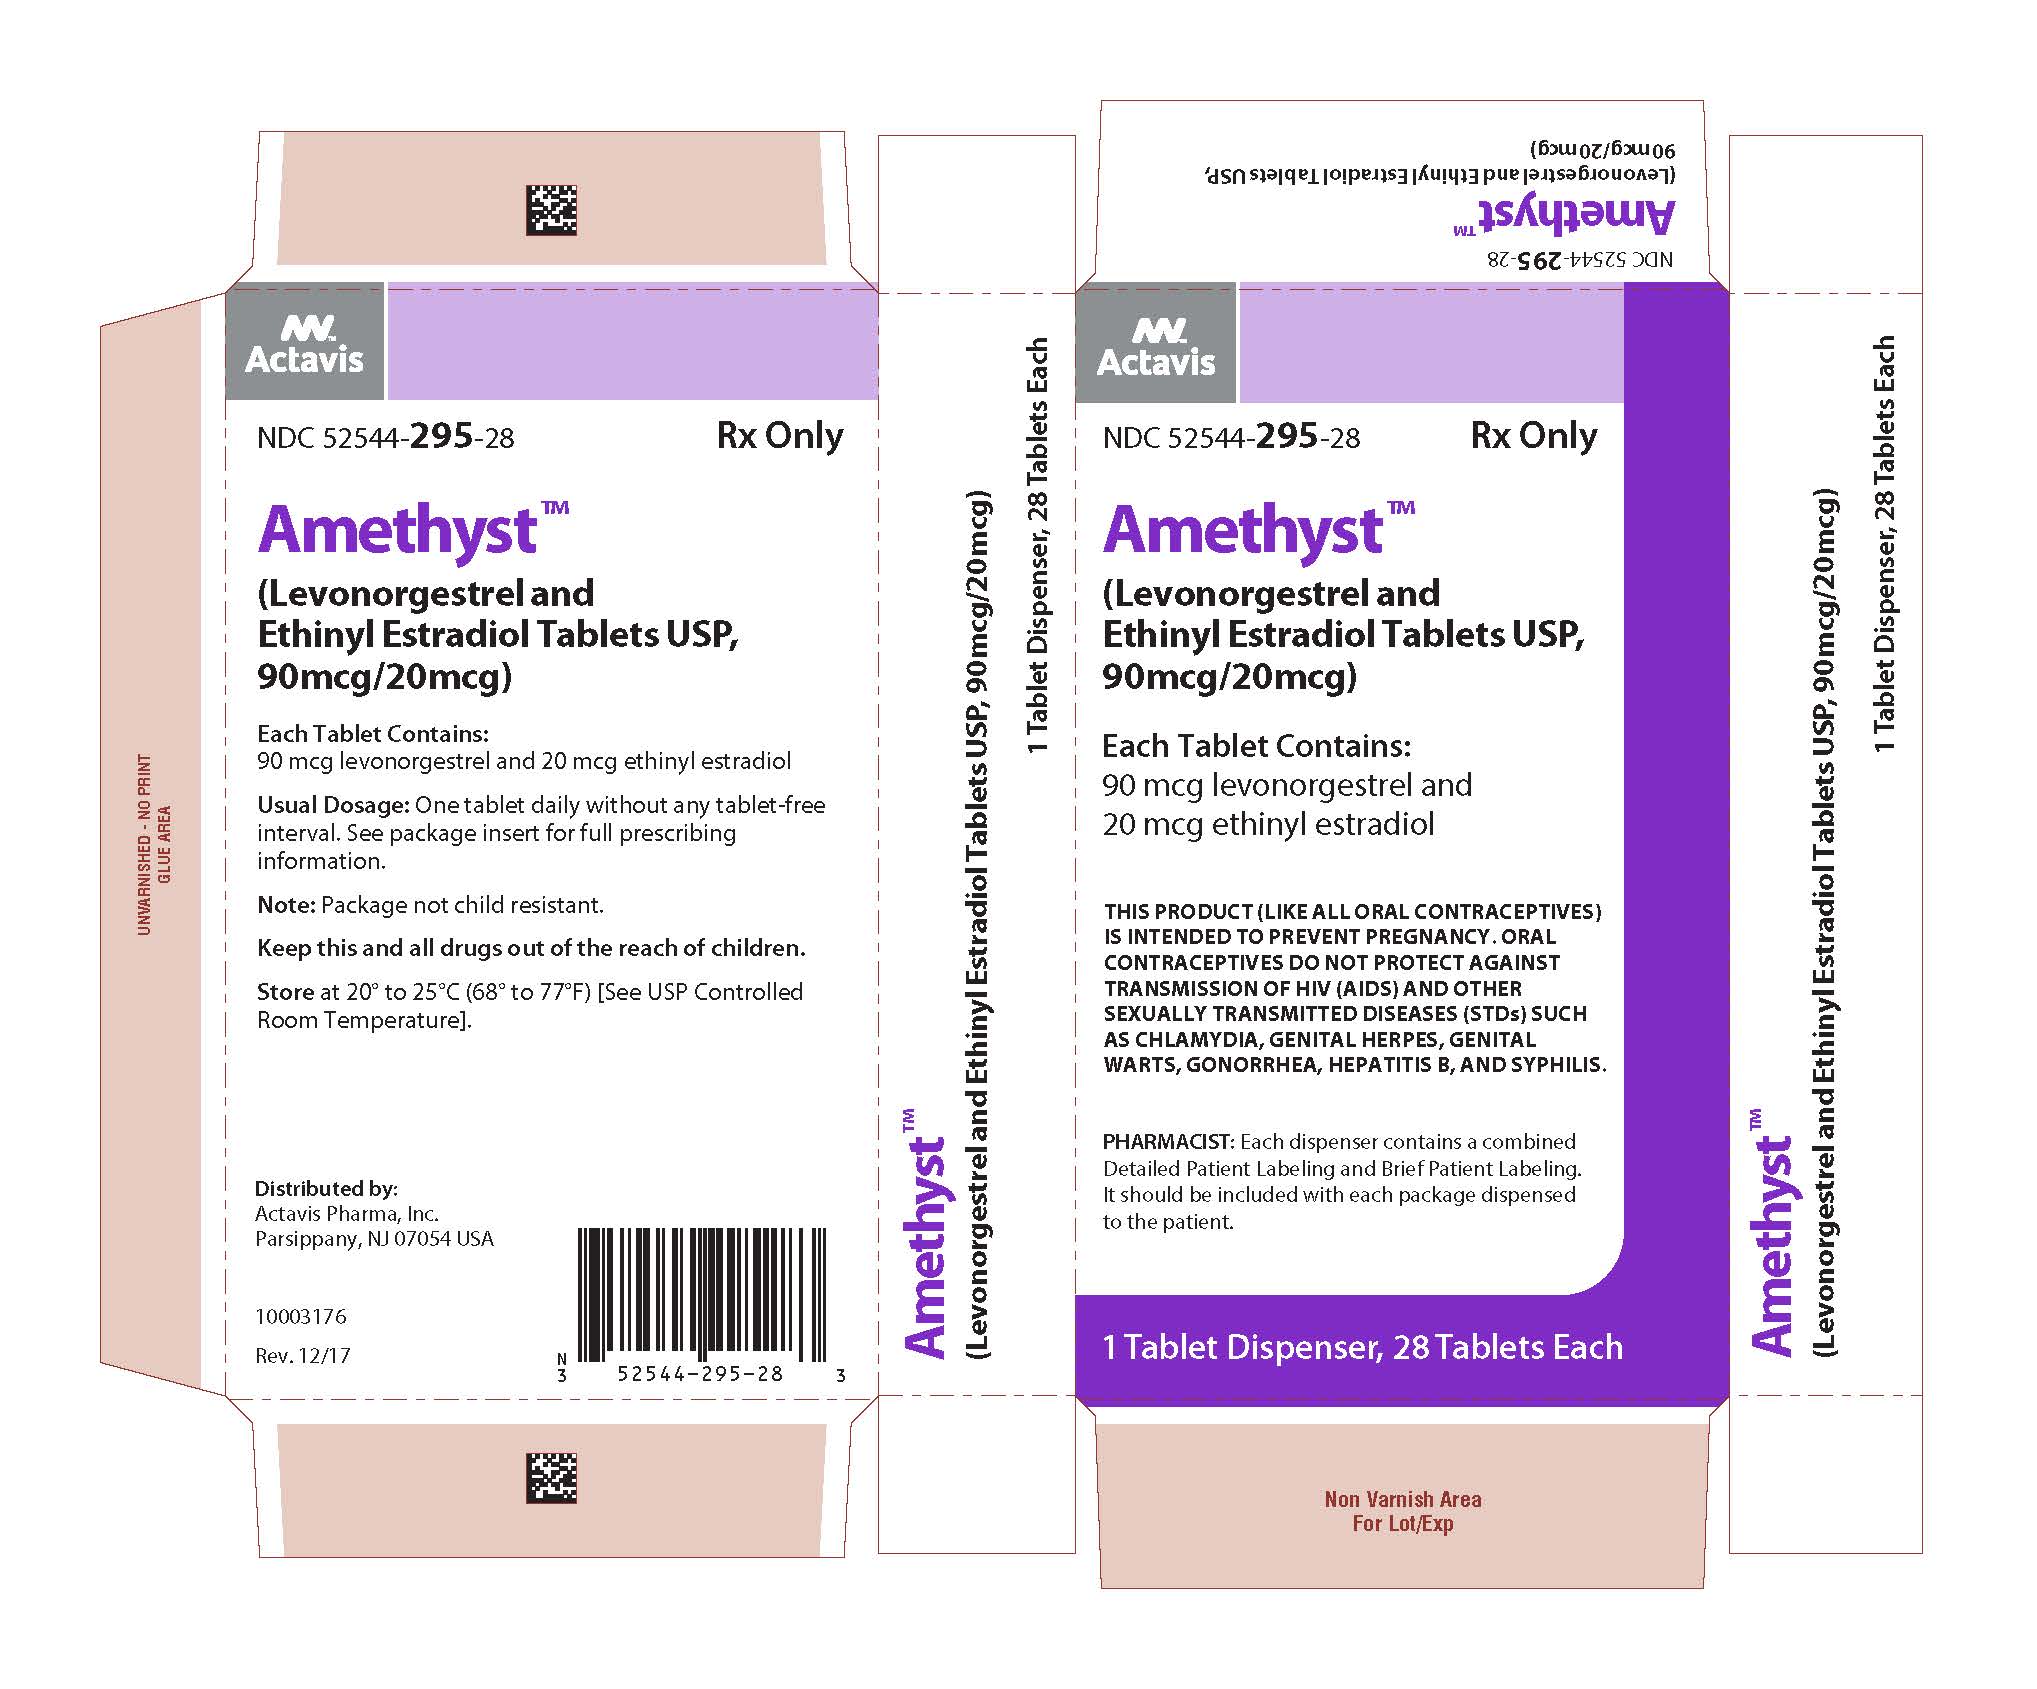 NDC 52544-295-28 Amethyst (Levongesterel and Ethinyl Estradiol Tabs, USP, 90 mcg/20 mcg) Rx Only